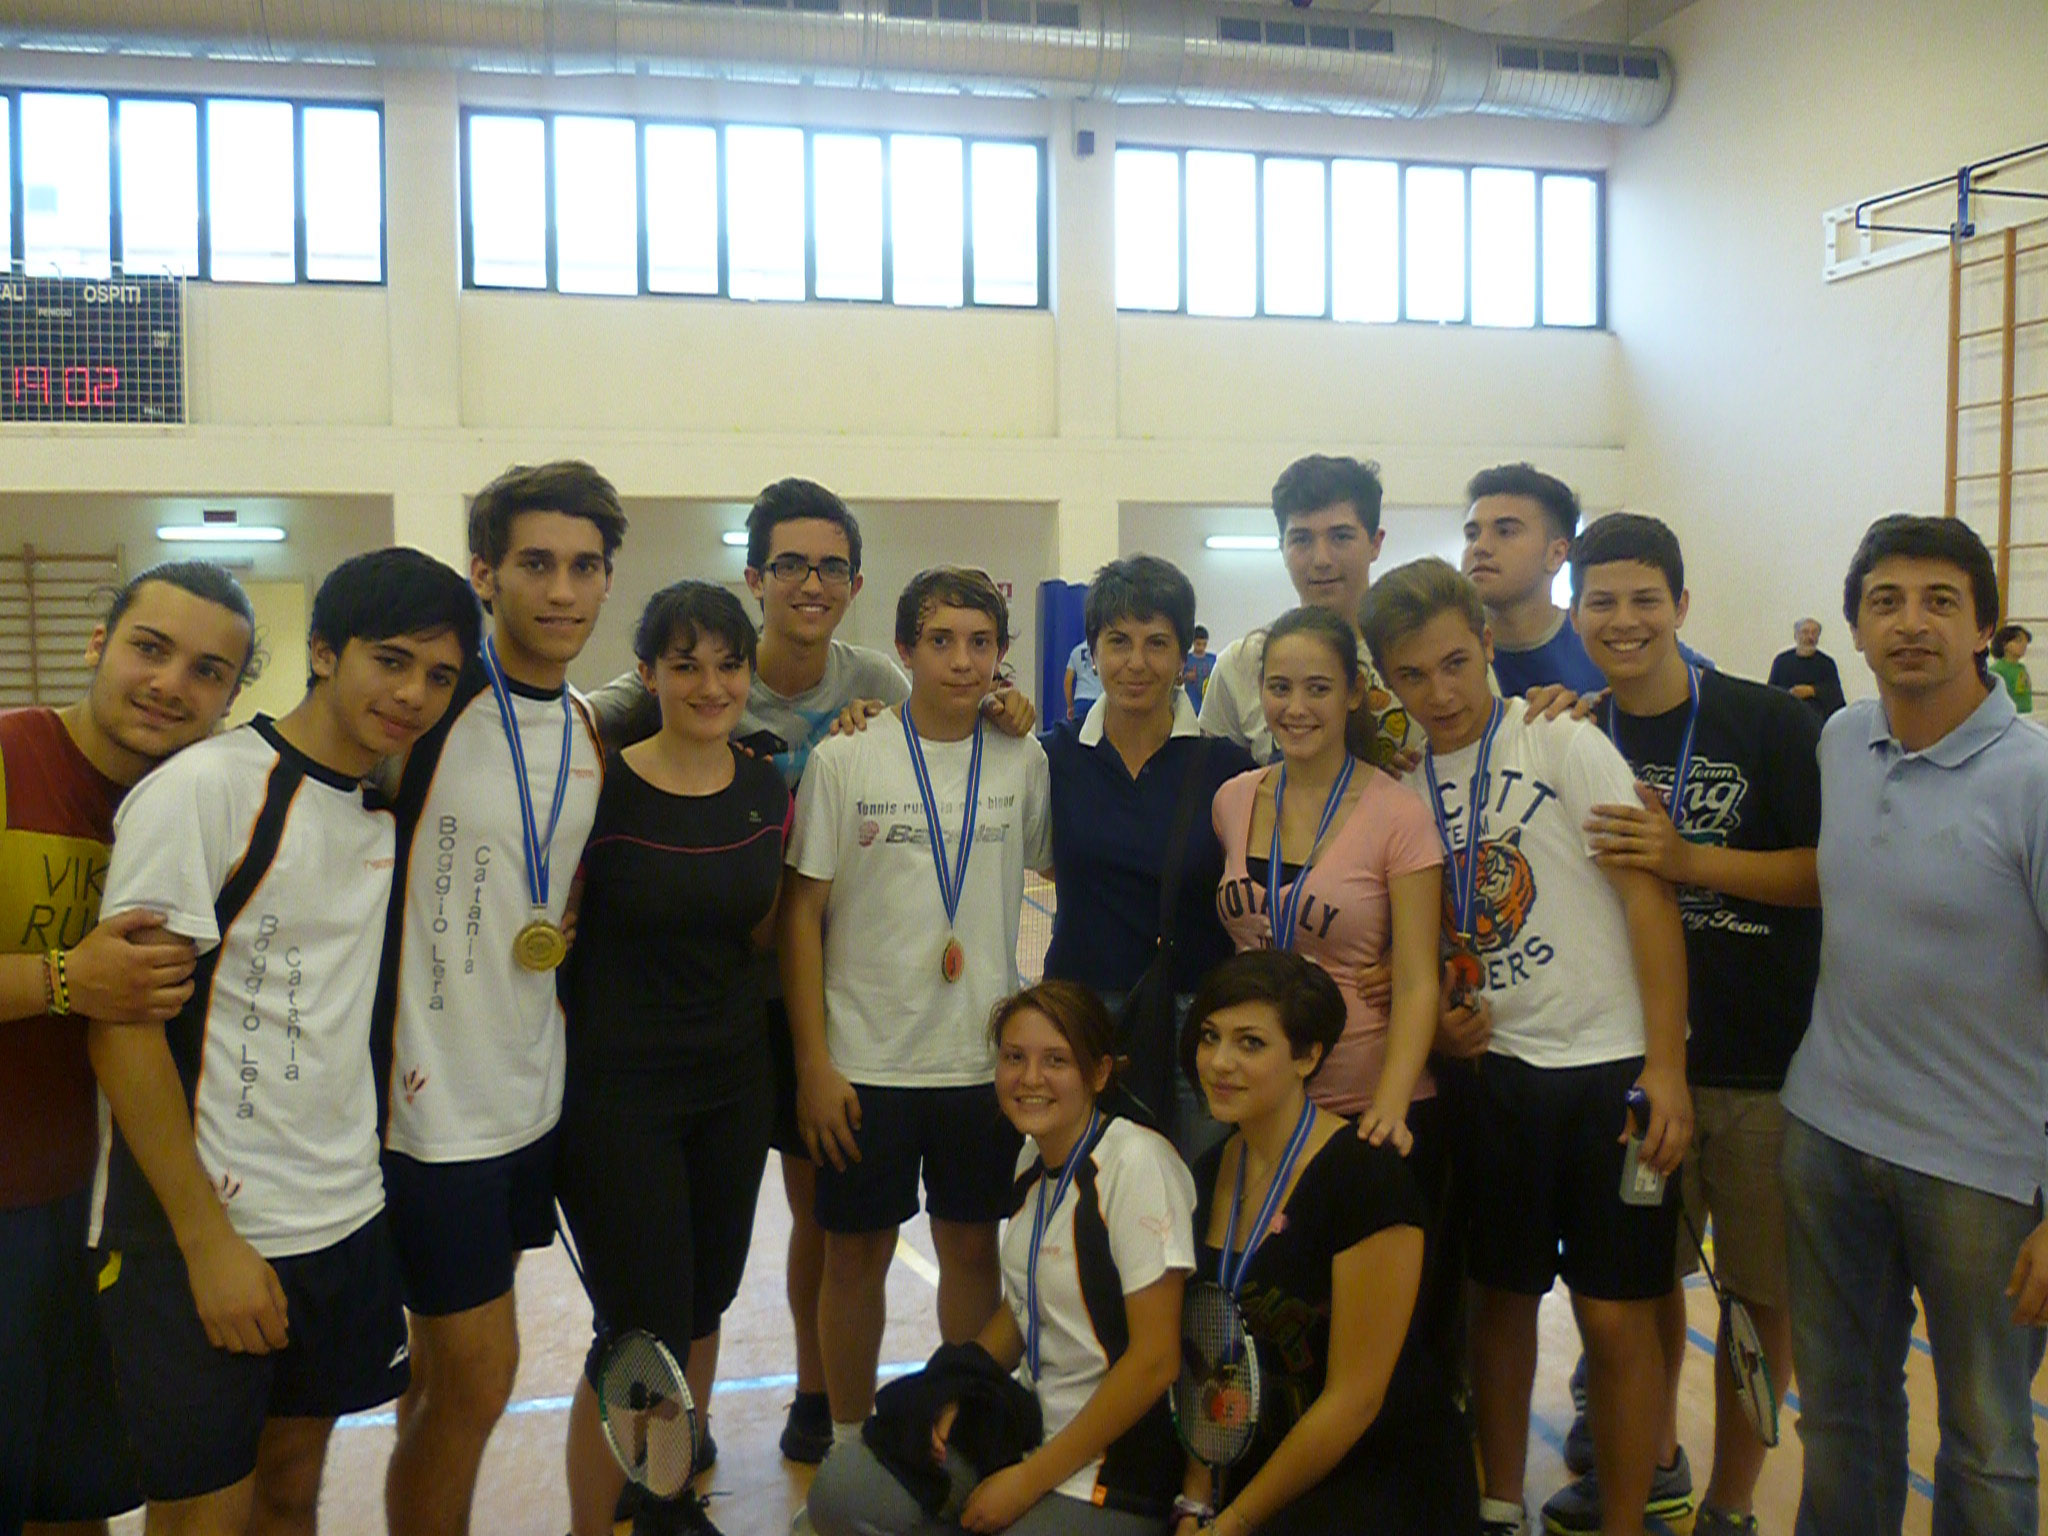 Catania-maggio2012-CampionatiGSAindividuali